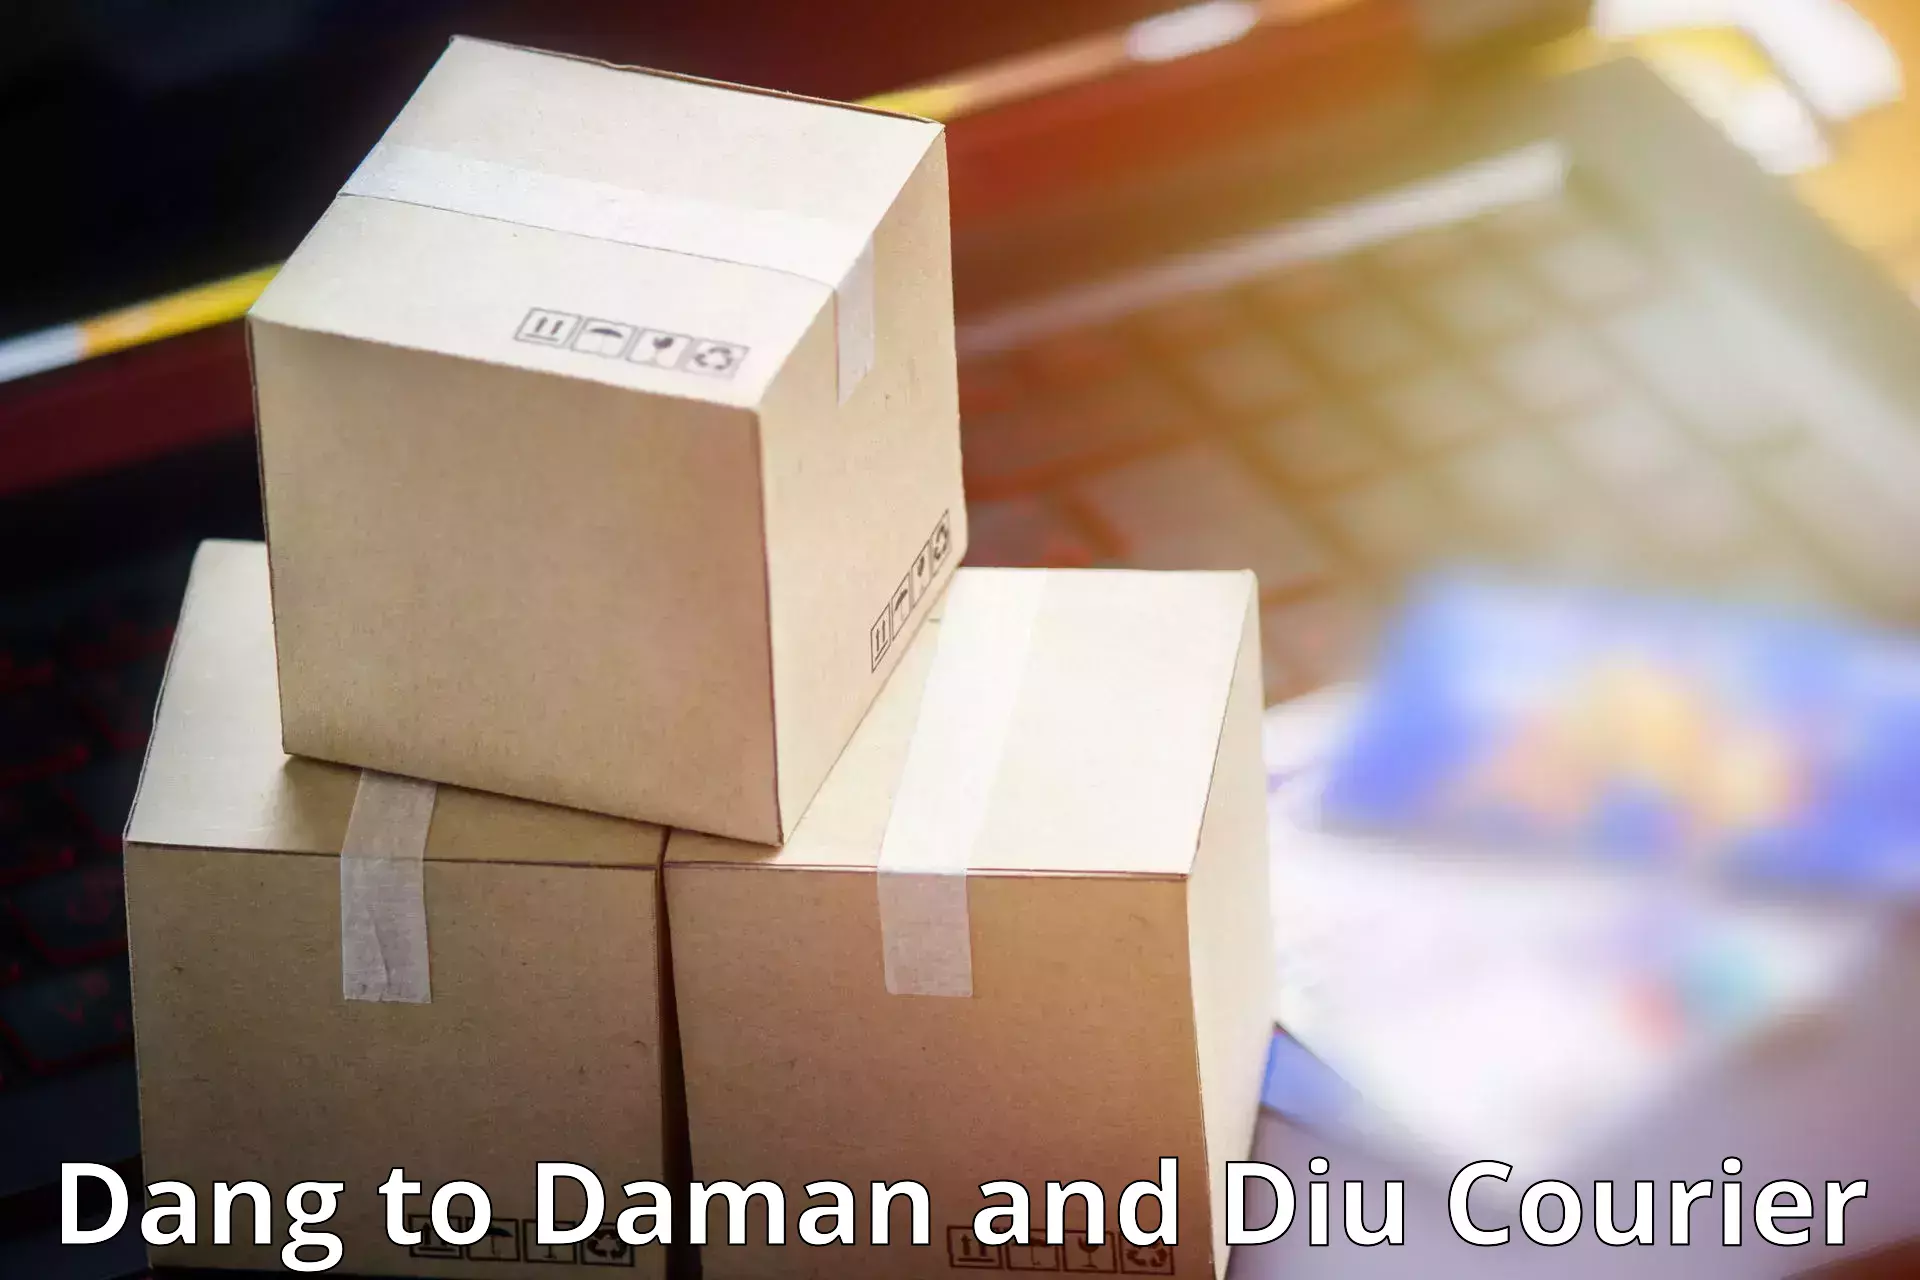 Custom logistics solutions Dang to Diu